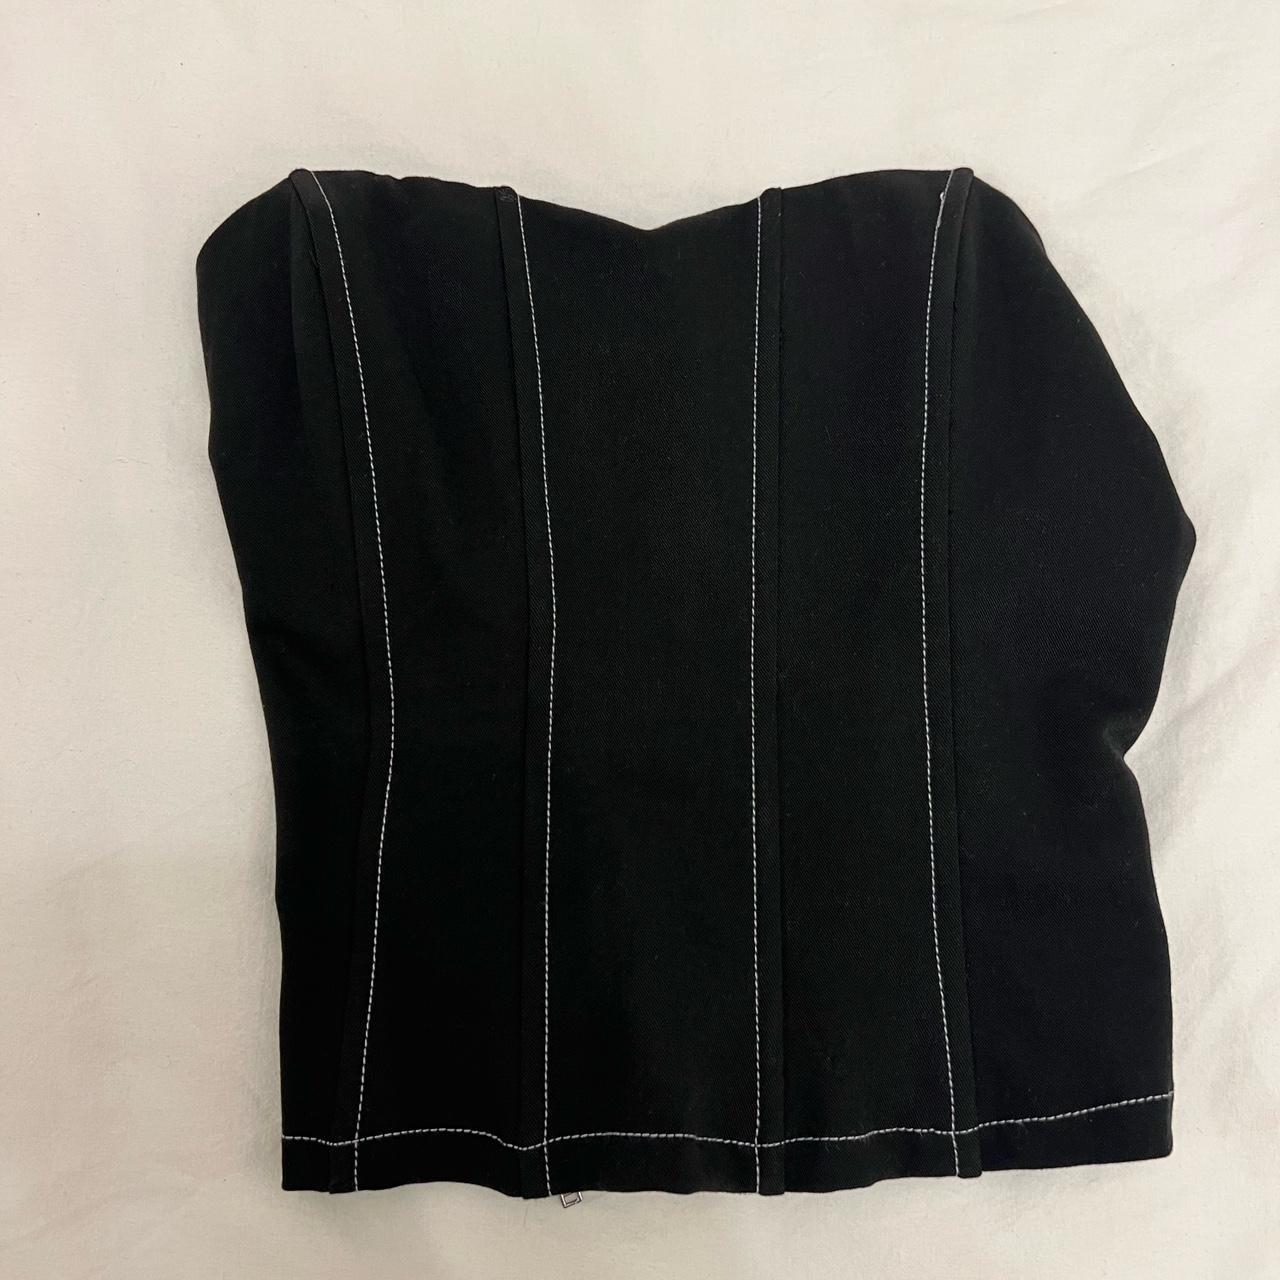 Motel rocks black corset size small - Depop